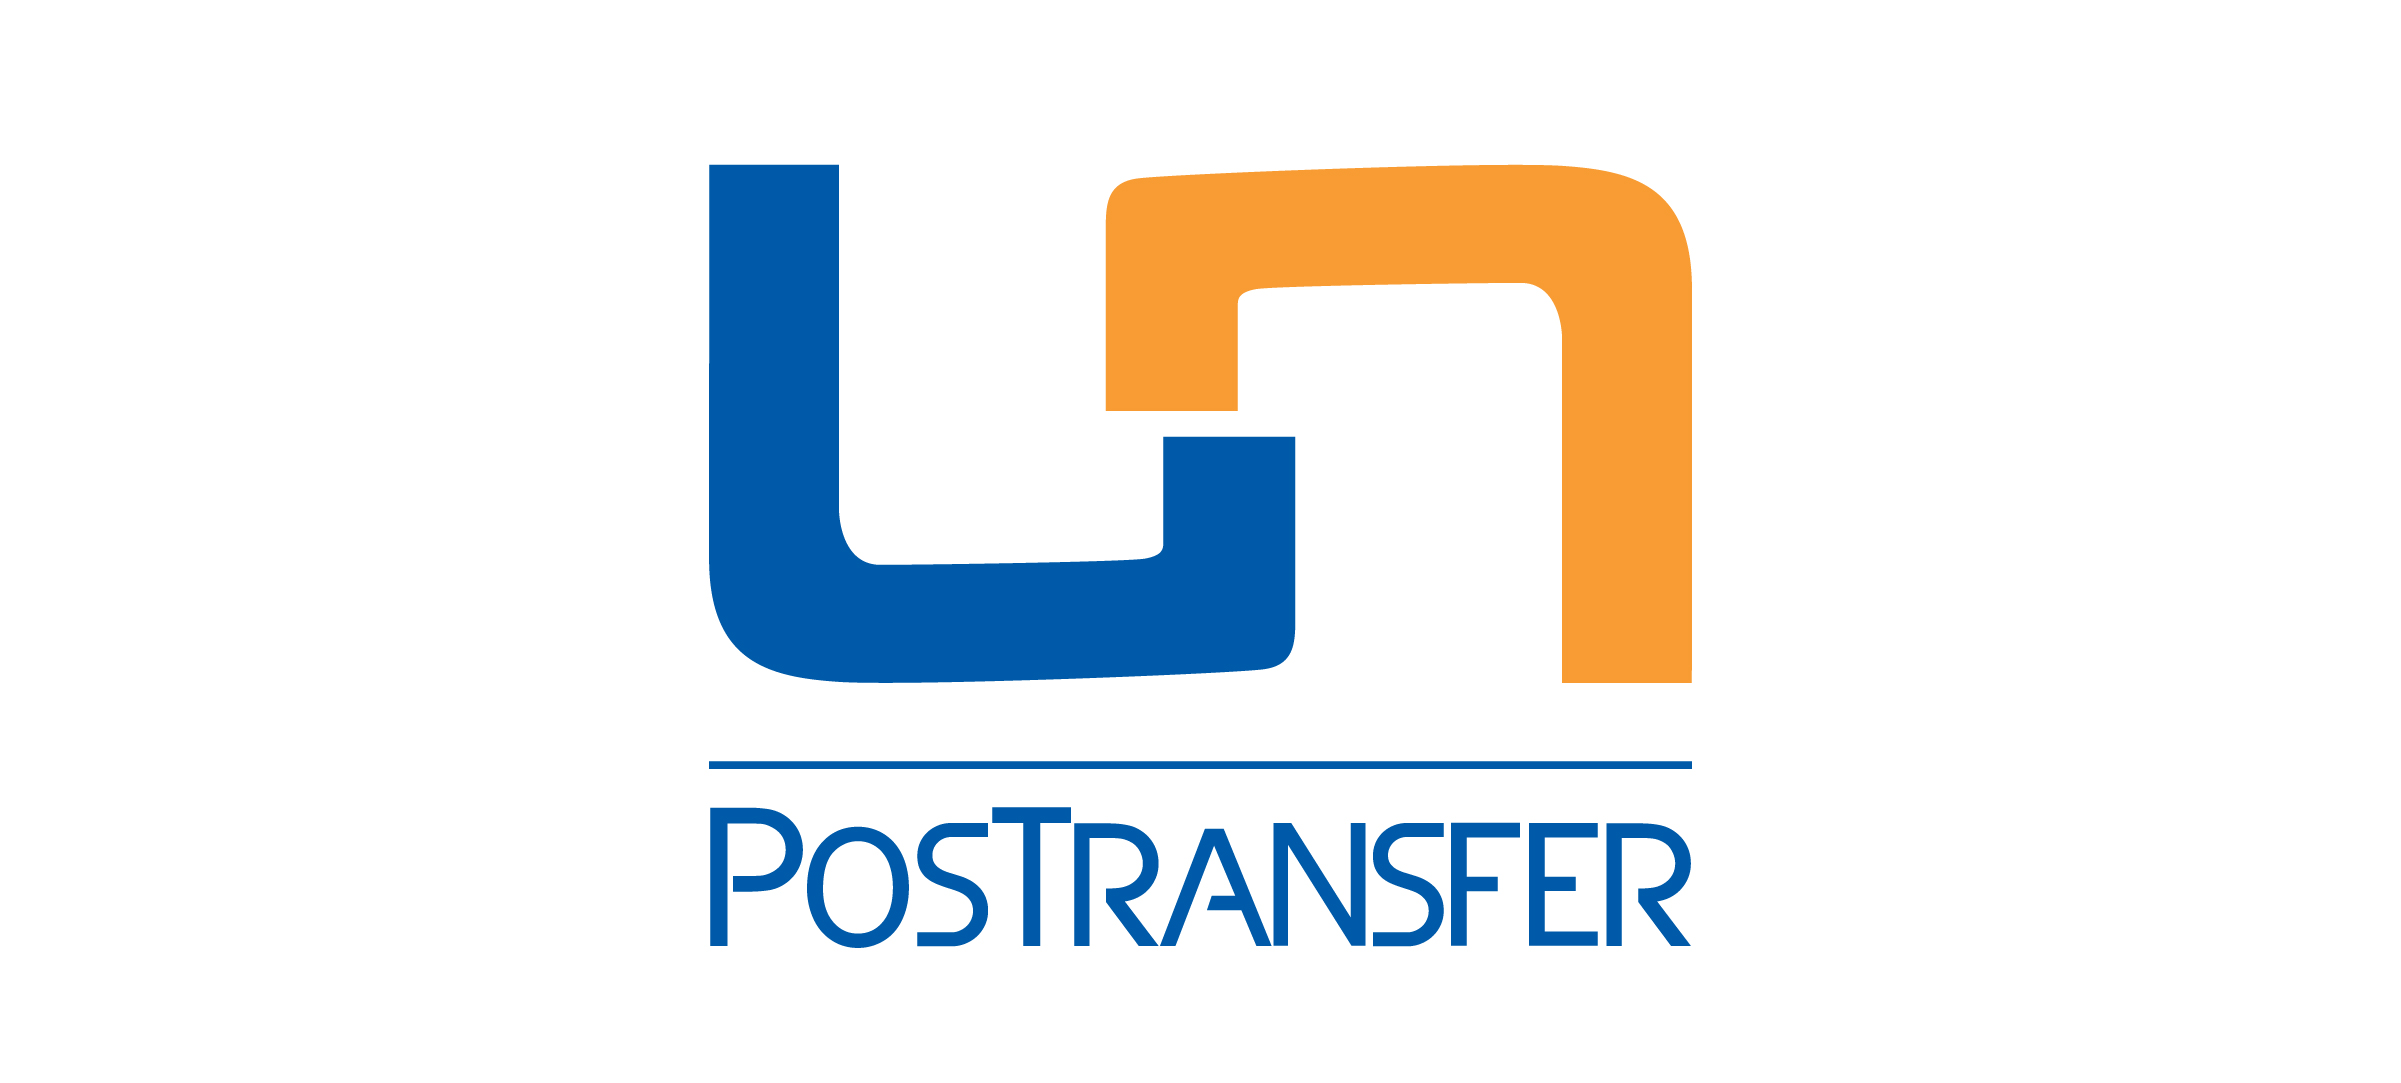 PosTransfer